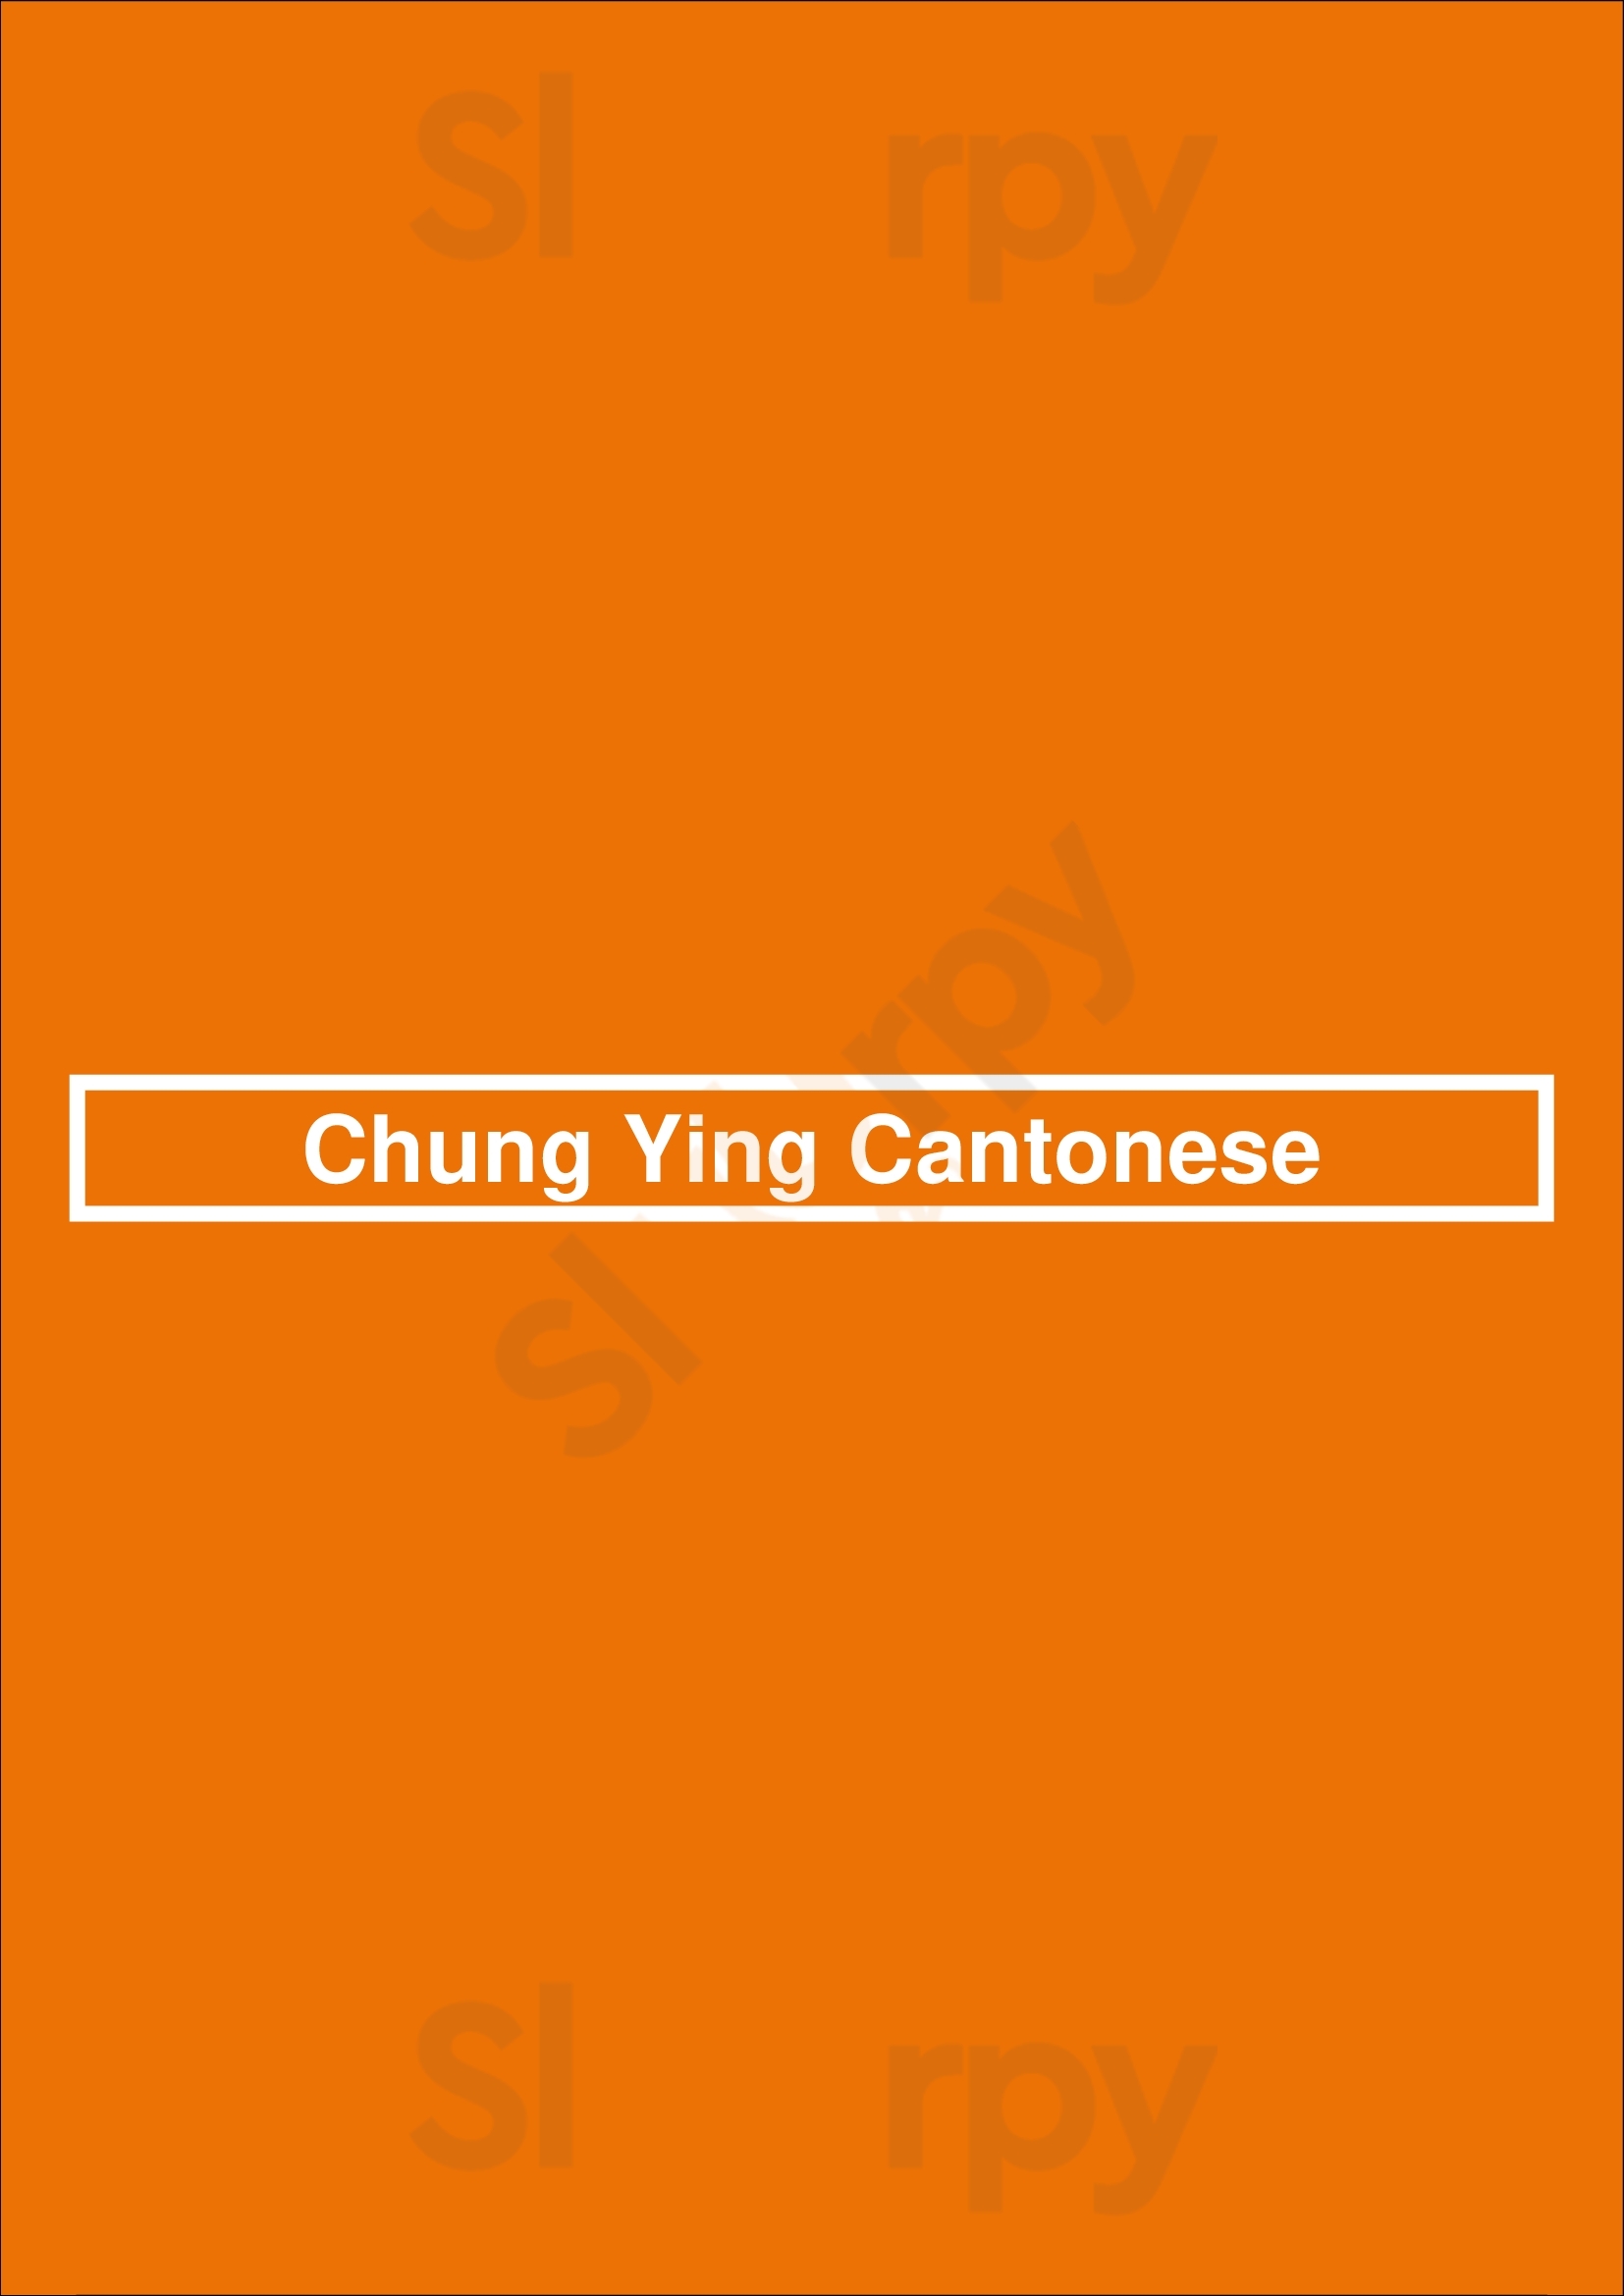 Chung Ying Cantonese Restaurant Birmingham Menu - 1